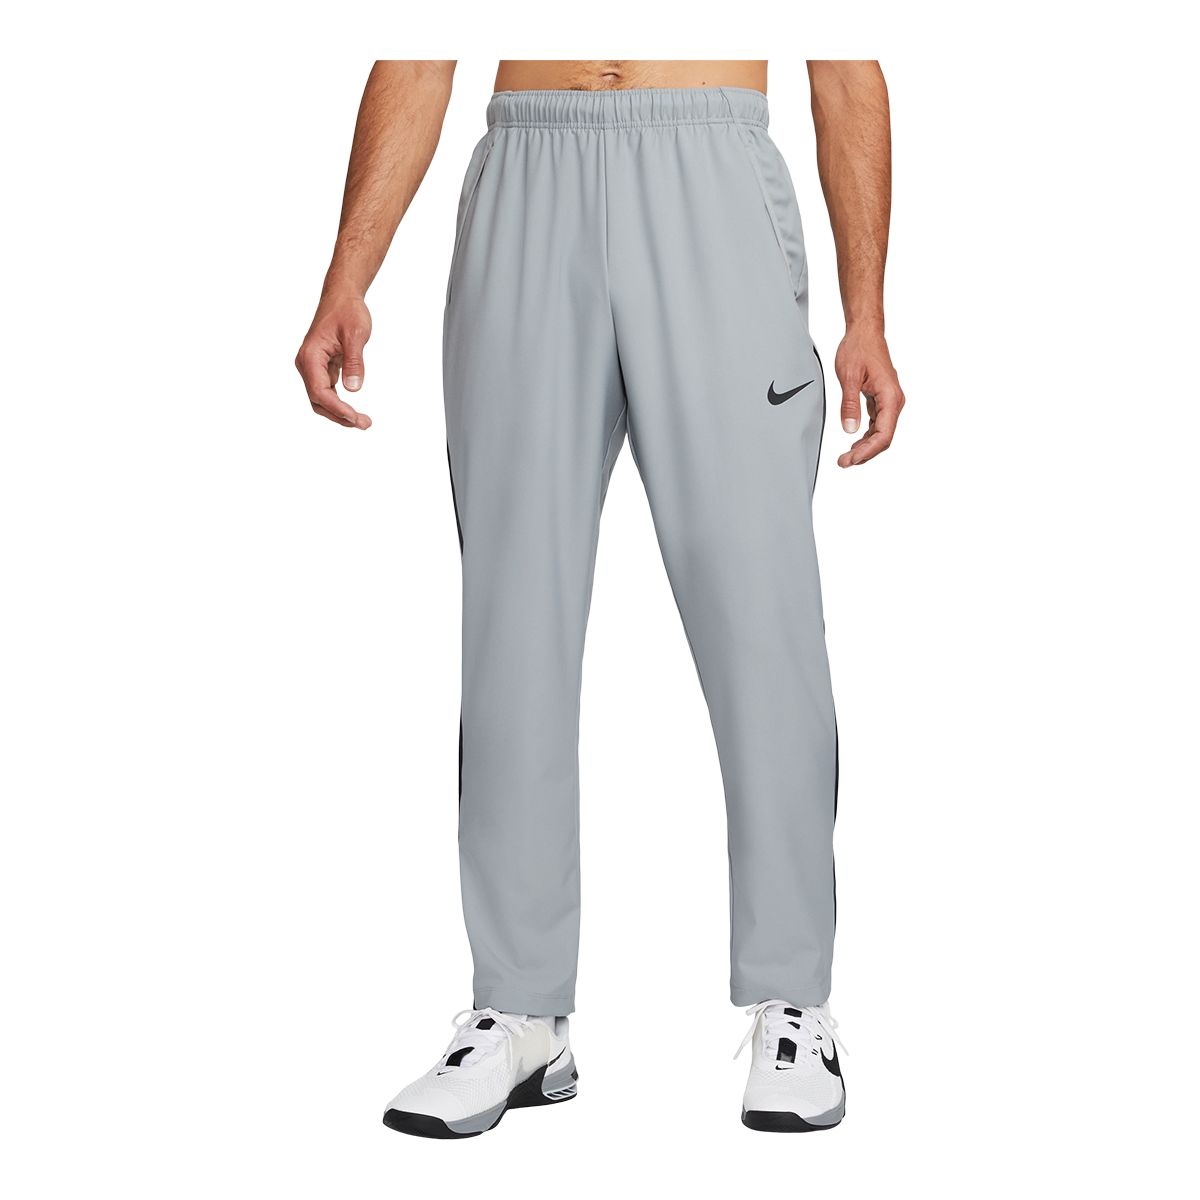 Nike Women's Mystic Athletic Warm-Up DriFIT Track Pants - Many Colors -  Walmart.com